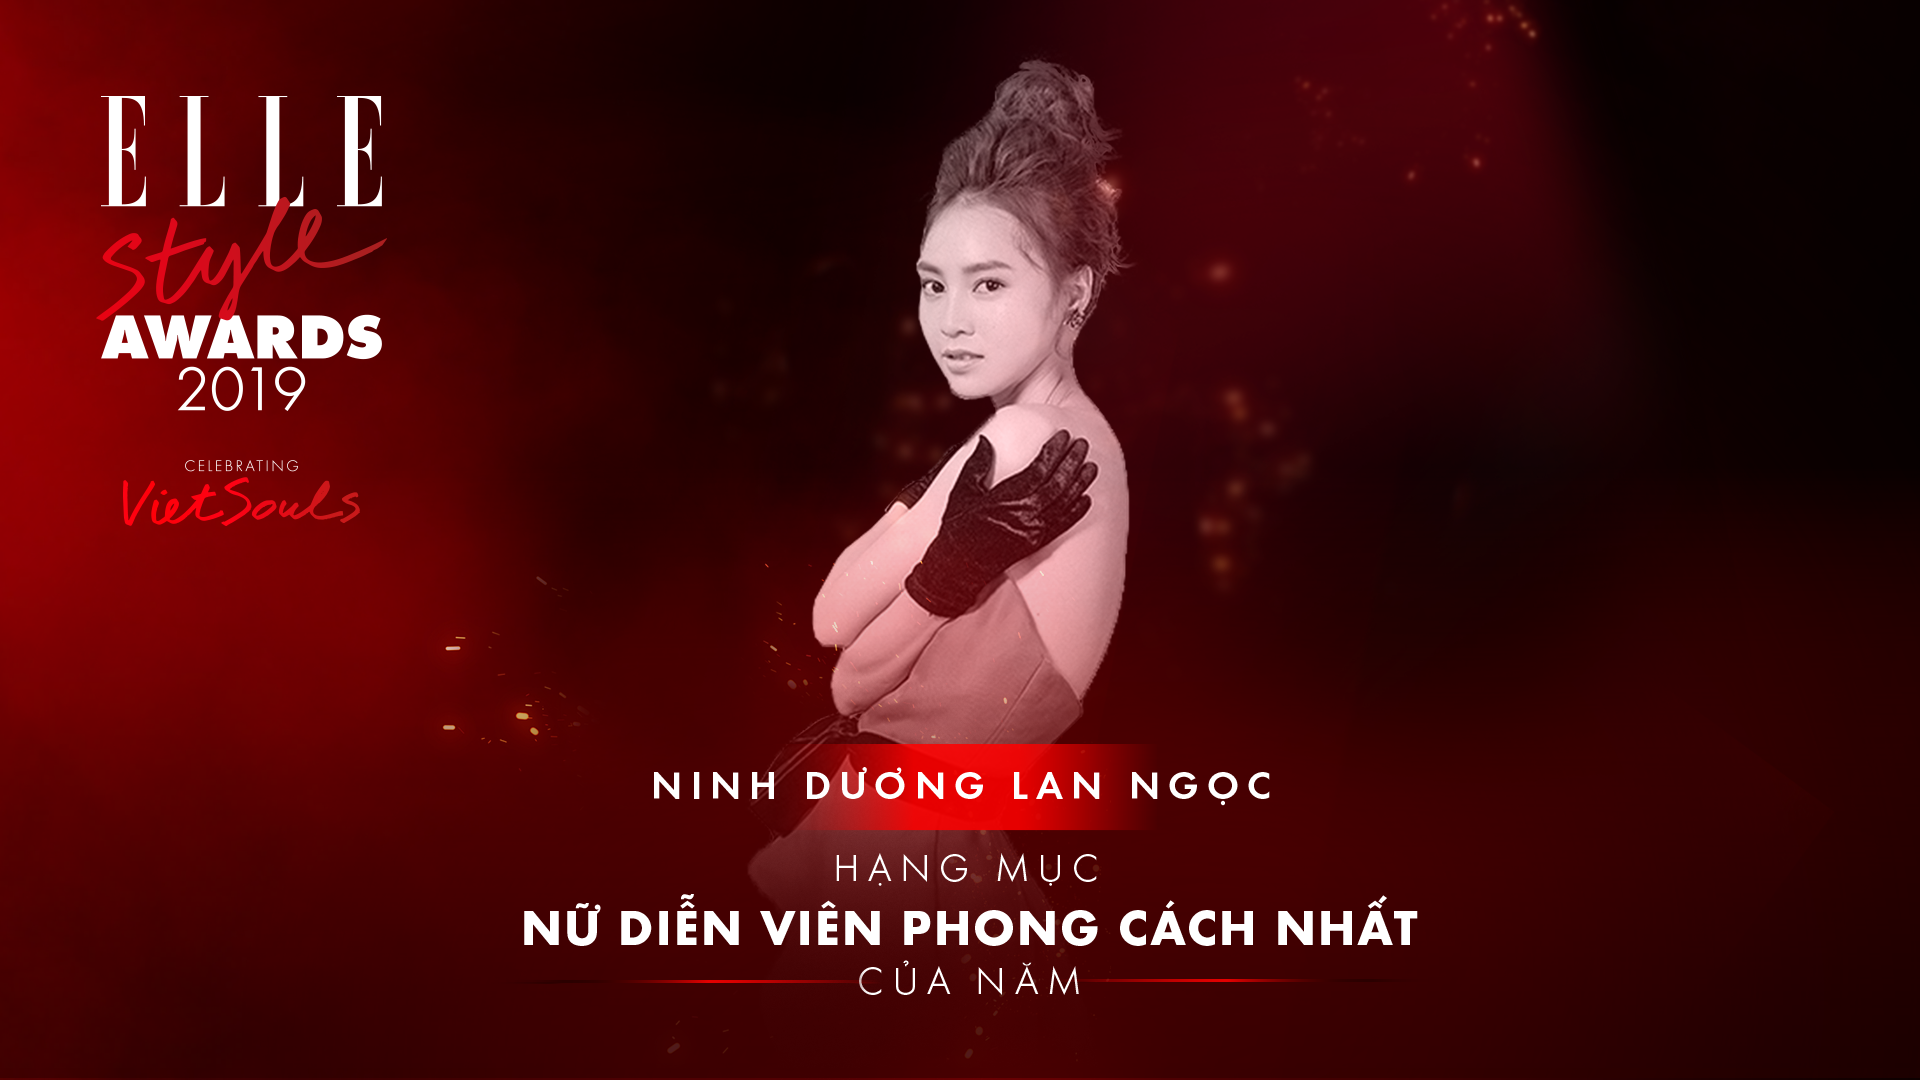 elle style awards 2019 ninh dương lan ngọc